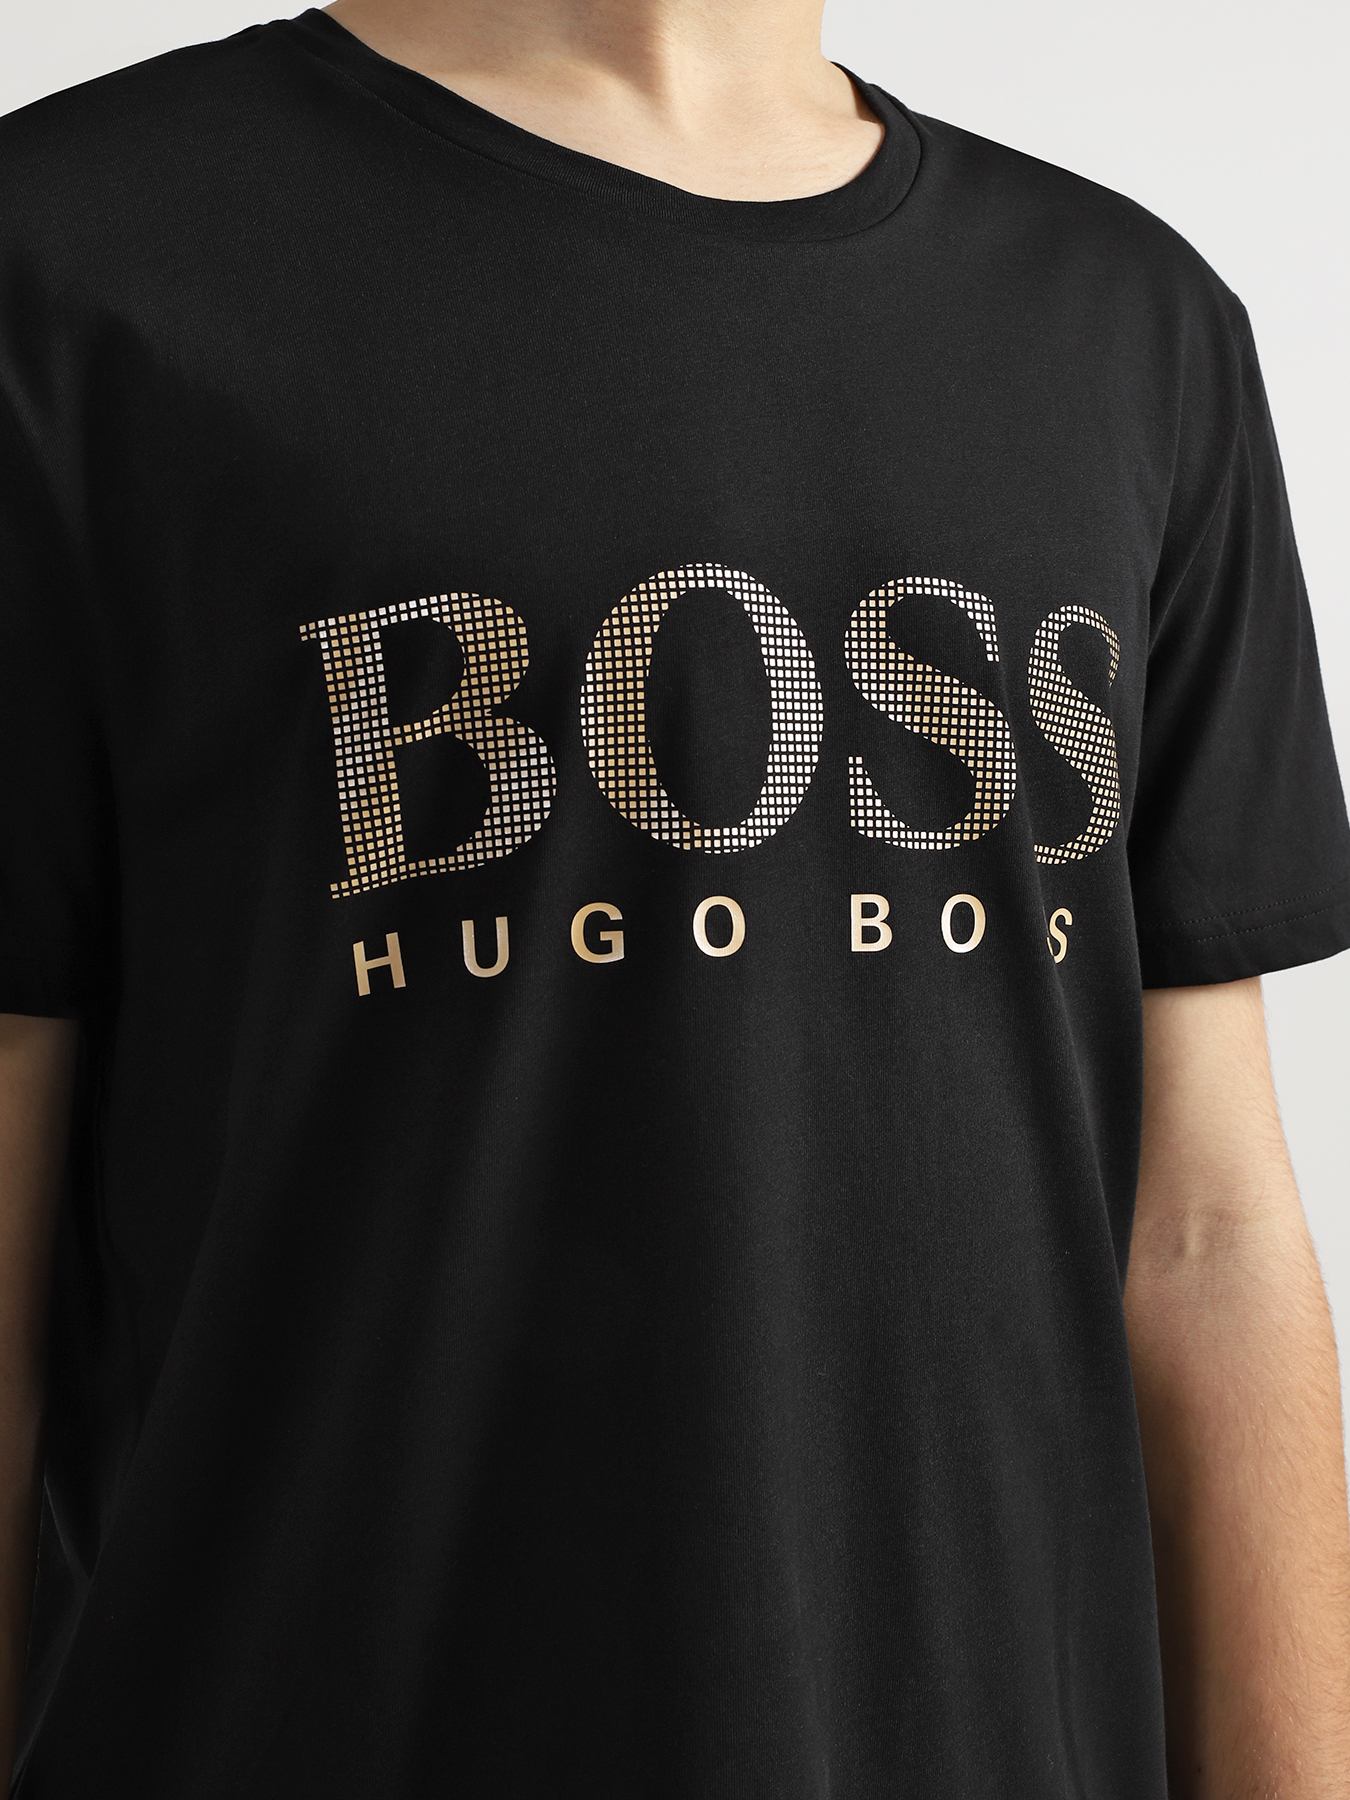 Футболки хуго босс. Футболка Хуго босс мужские. Футболка Boss Hugo Boss. Hugo Boss майка. Boss Hugo Boss мужские футболки.